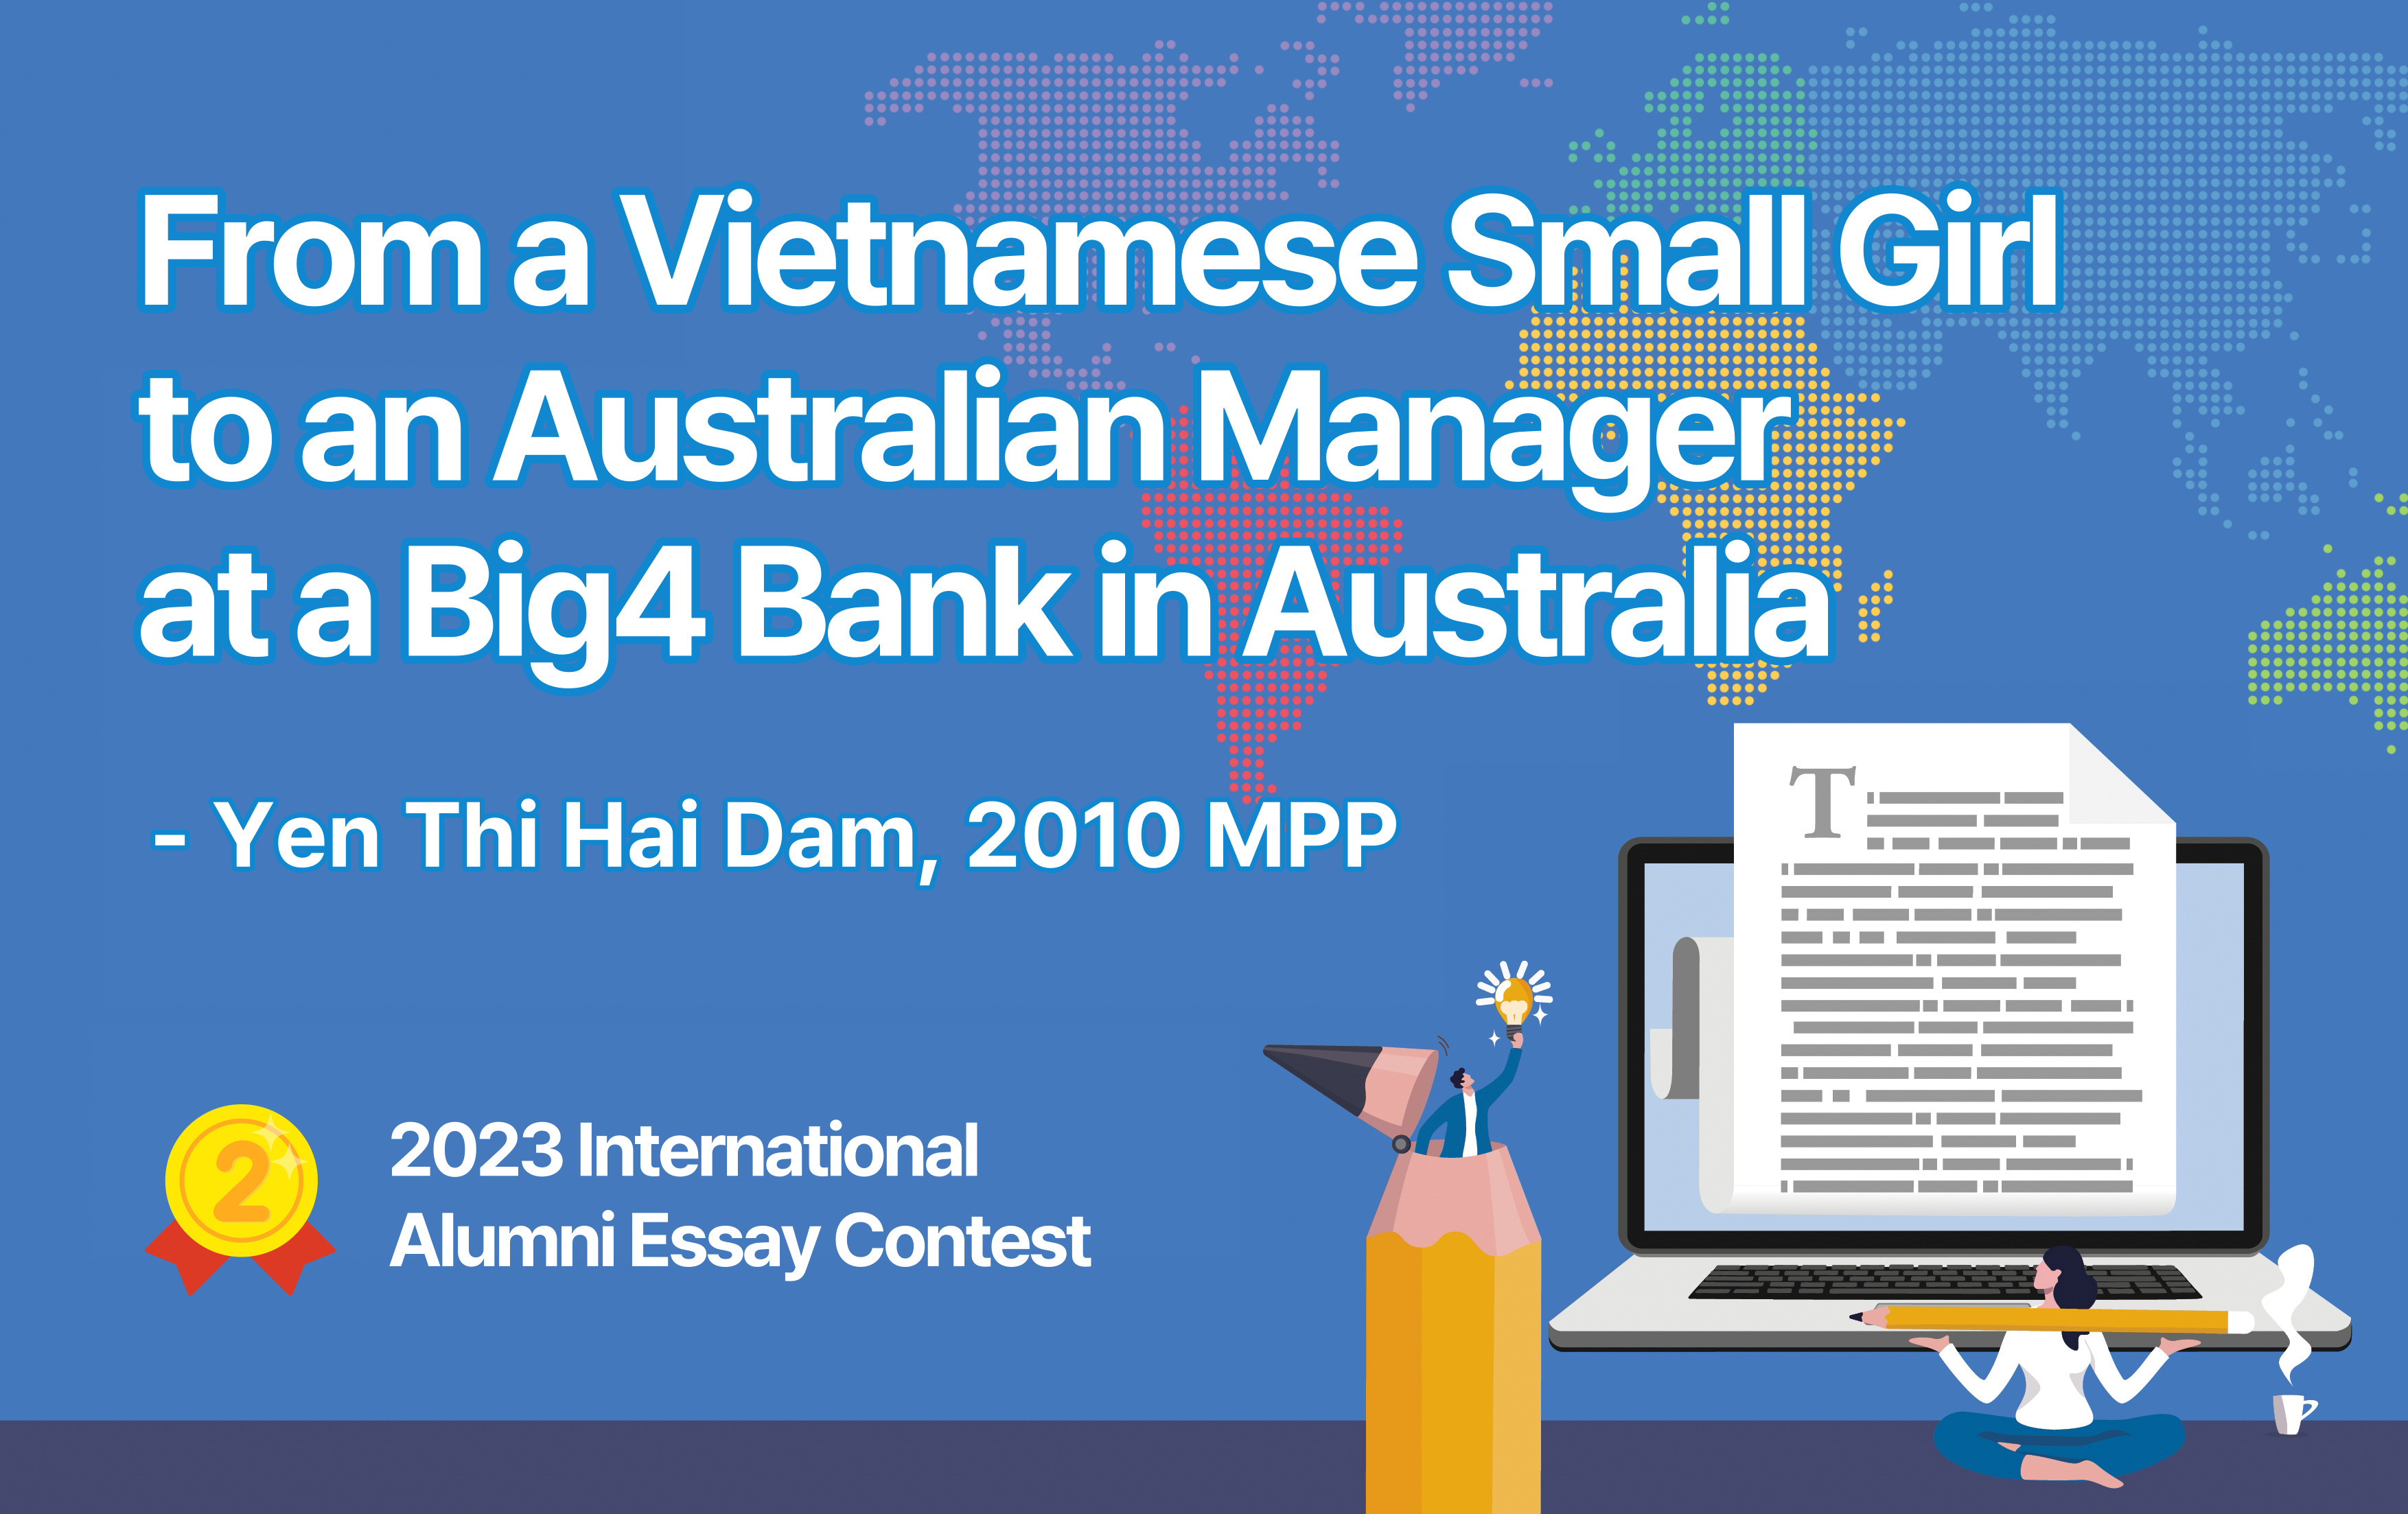 From a Vietnamese small girl to an Australian Manager at a Big4 bank in Australia (Yen Thi Hai Dam, 2010 MPP)